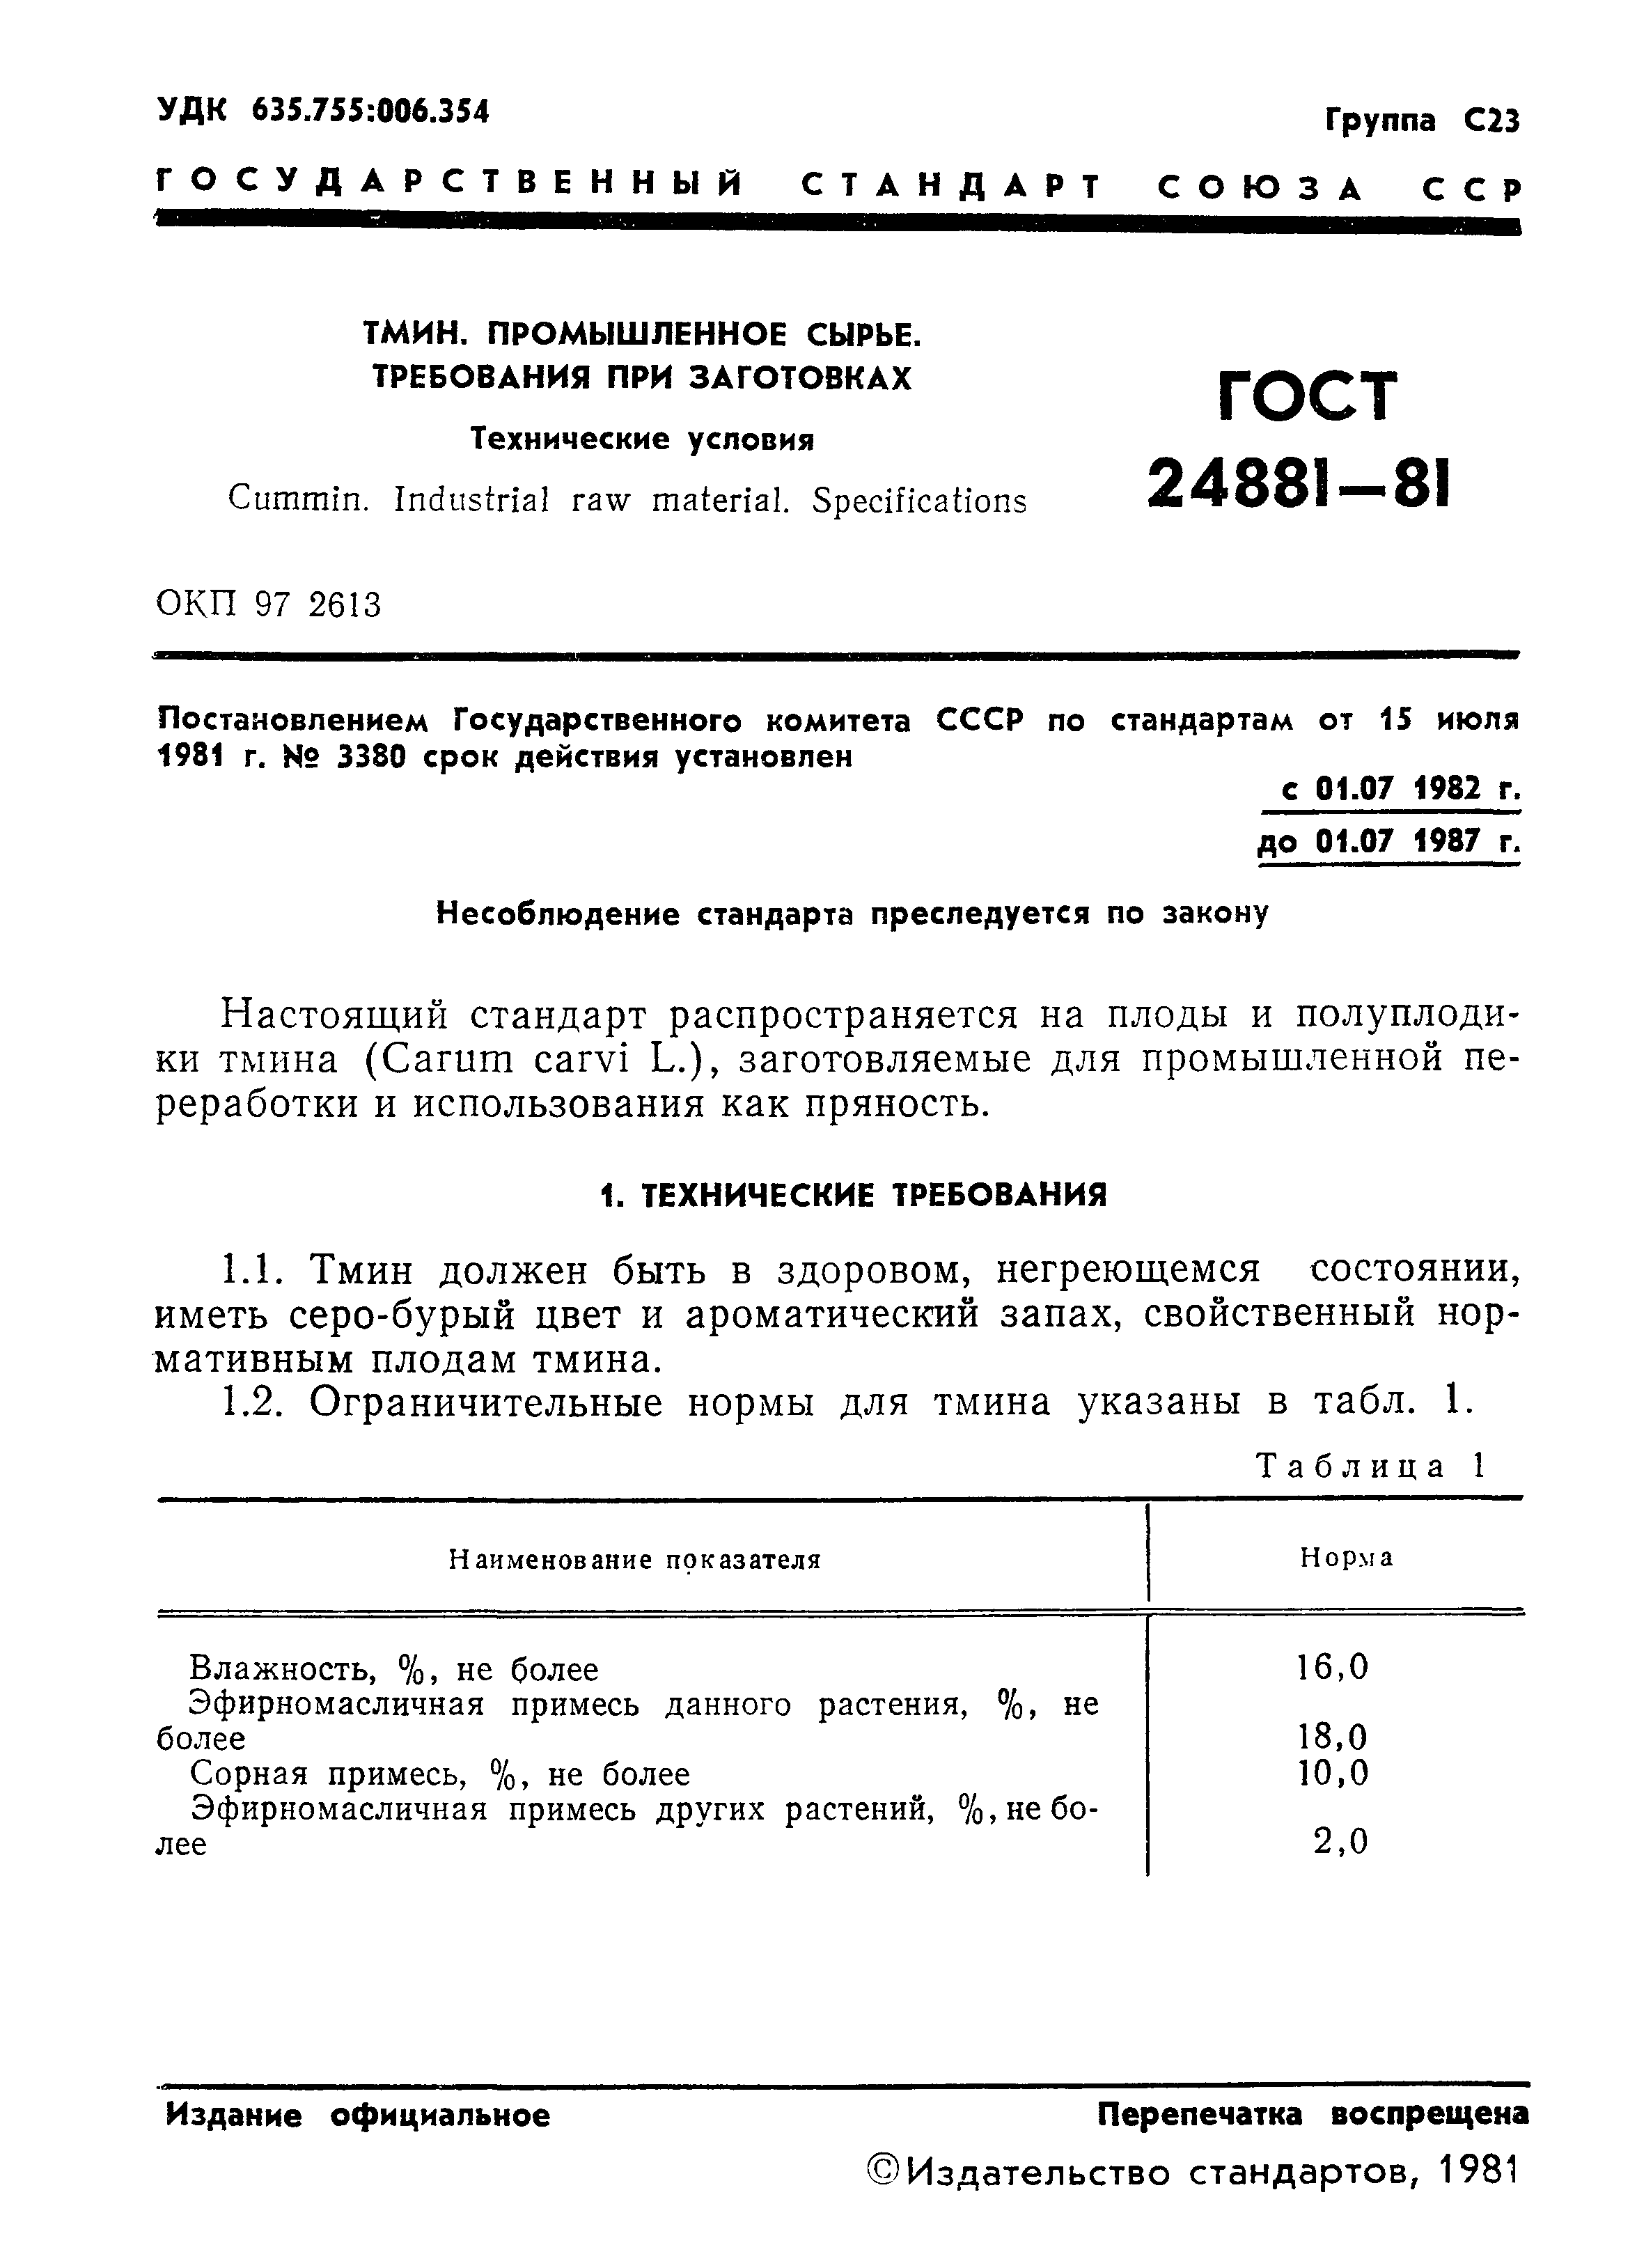 ГОСТ 24881-81